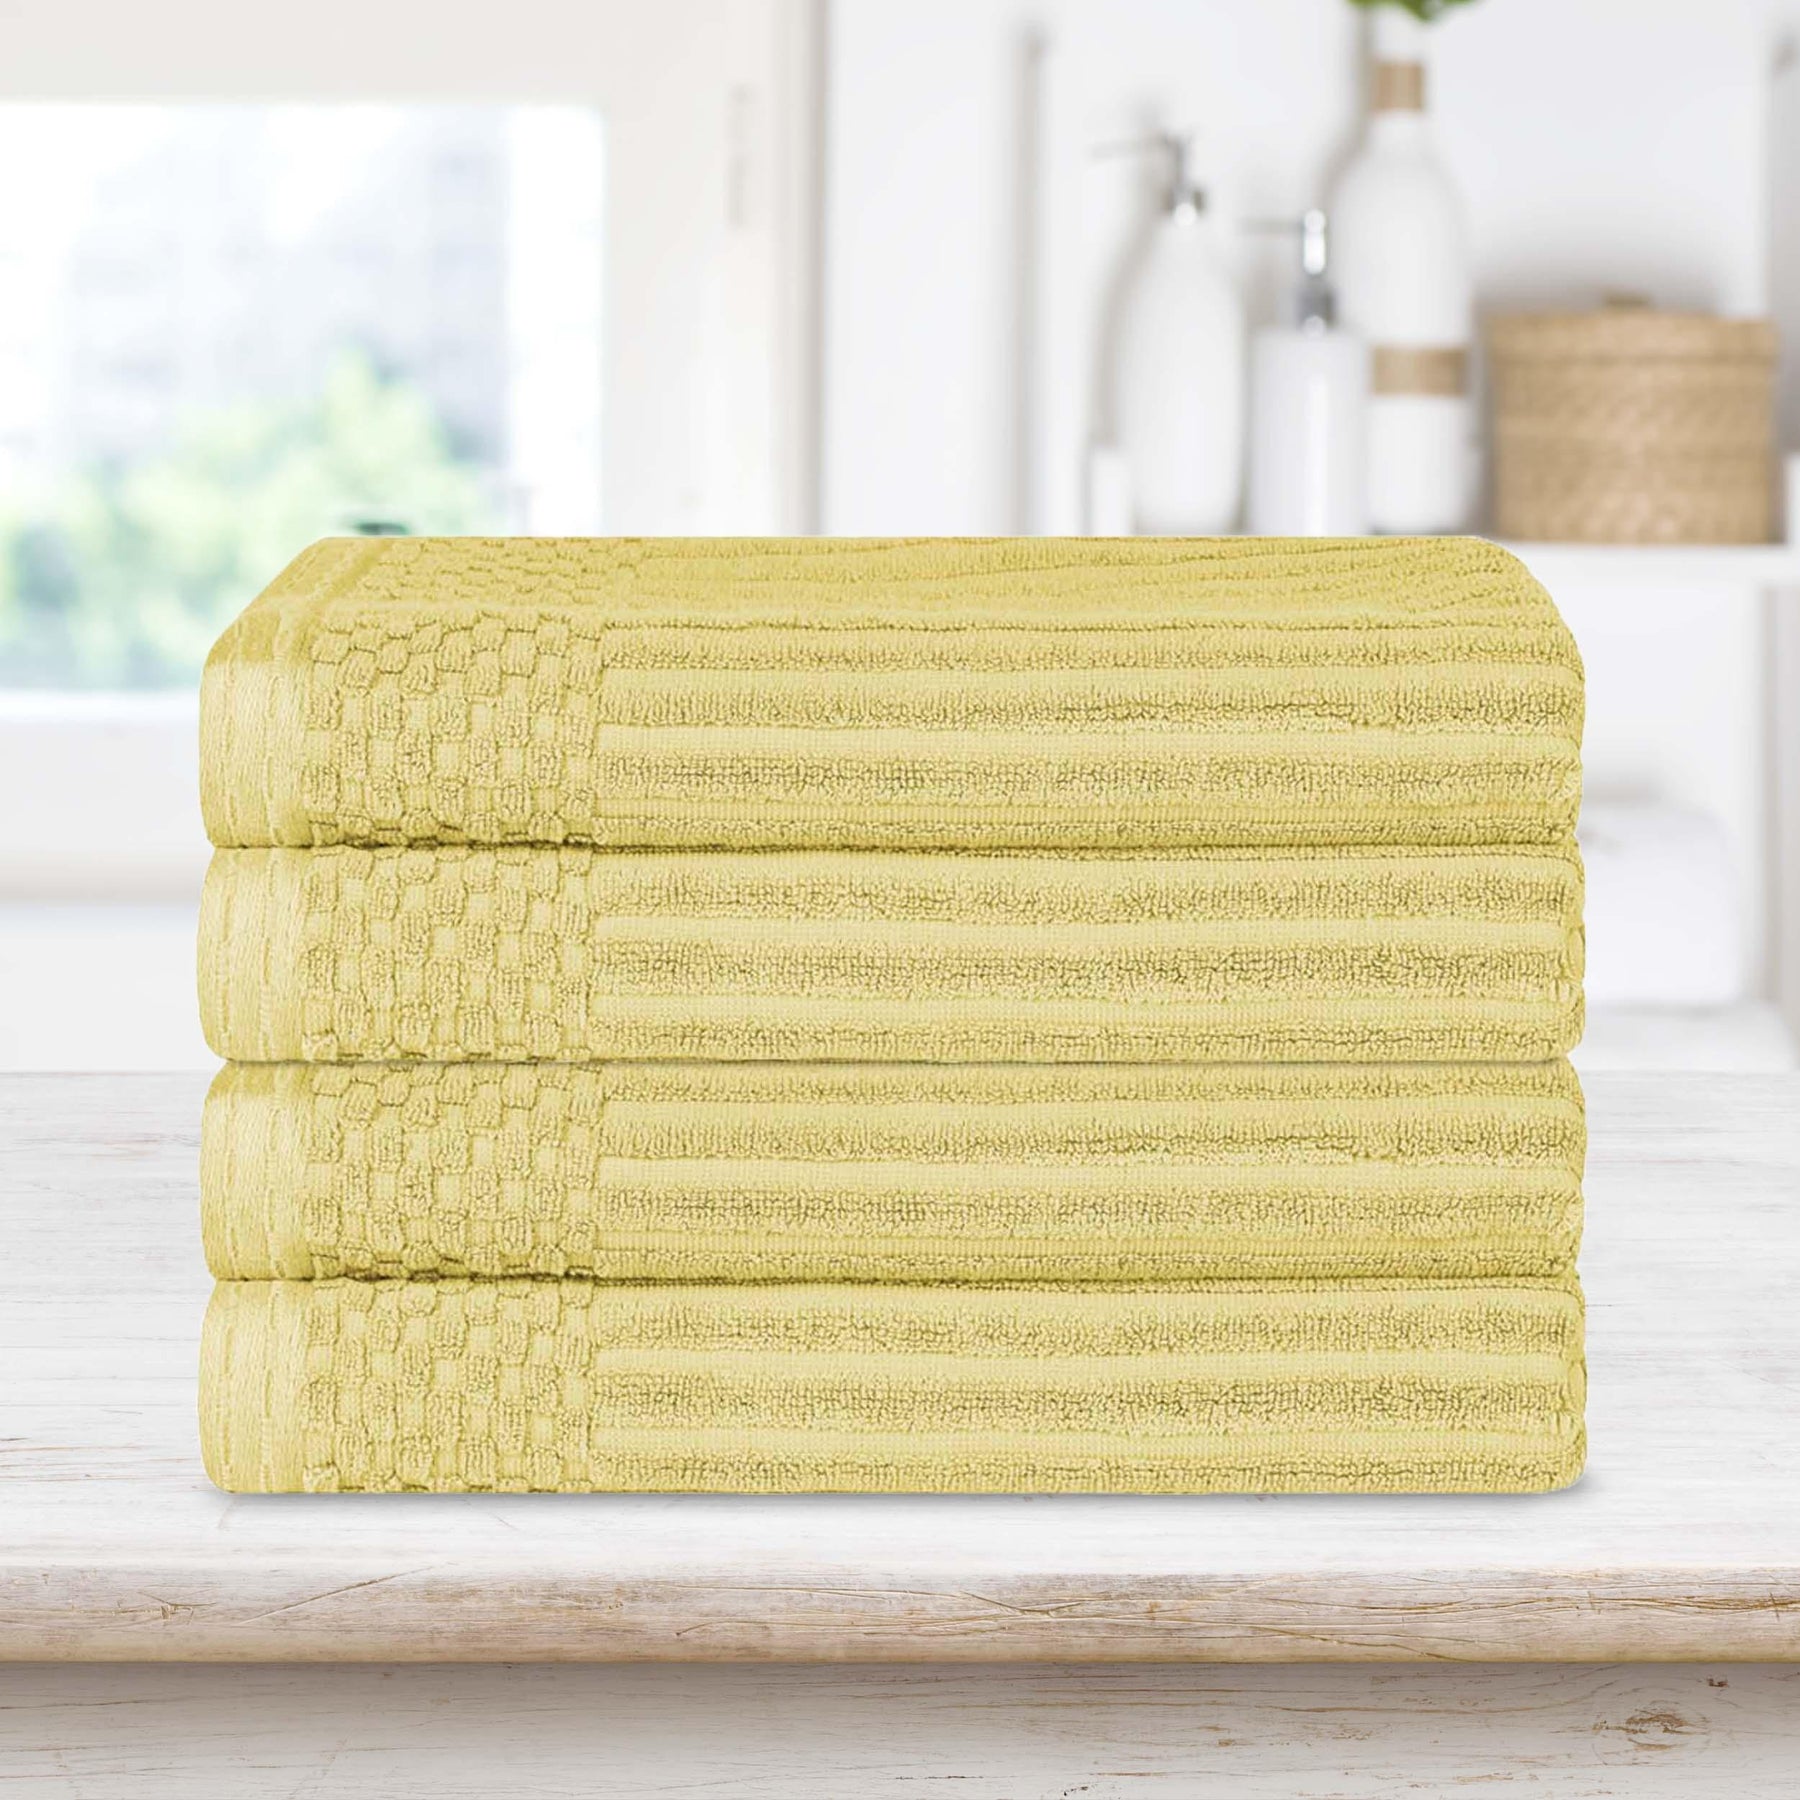  Superior Soho Ribbed Textured Cotton Ultra-Absorbent Bath Sheet & Bath Towel Set - Golden Mist